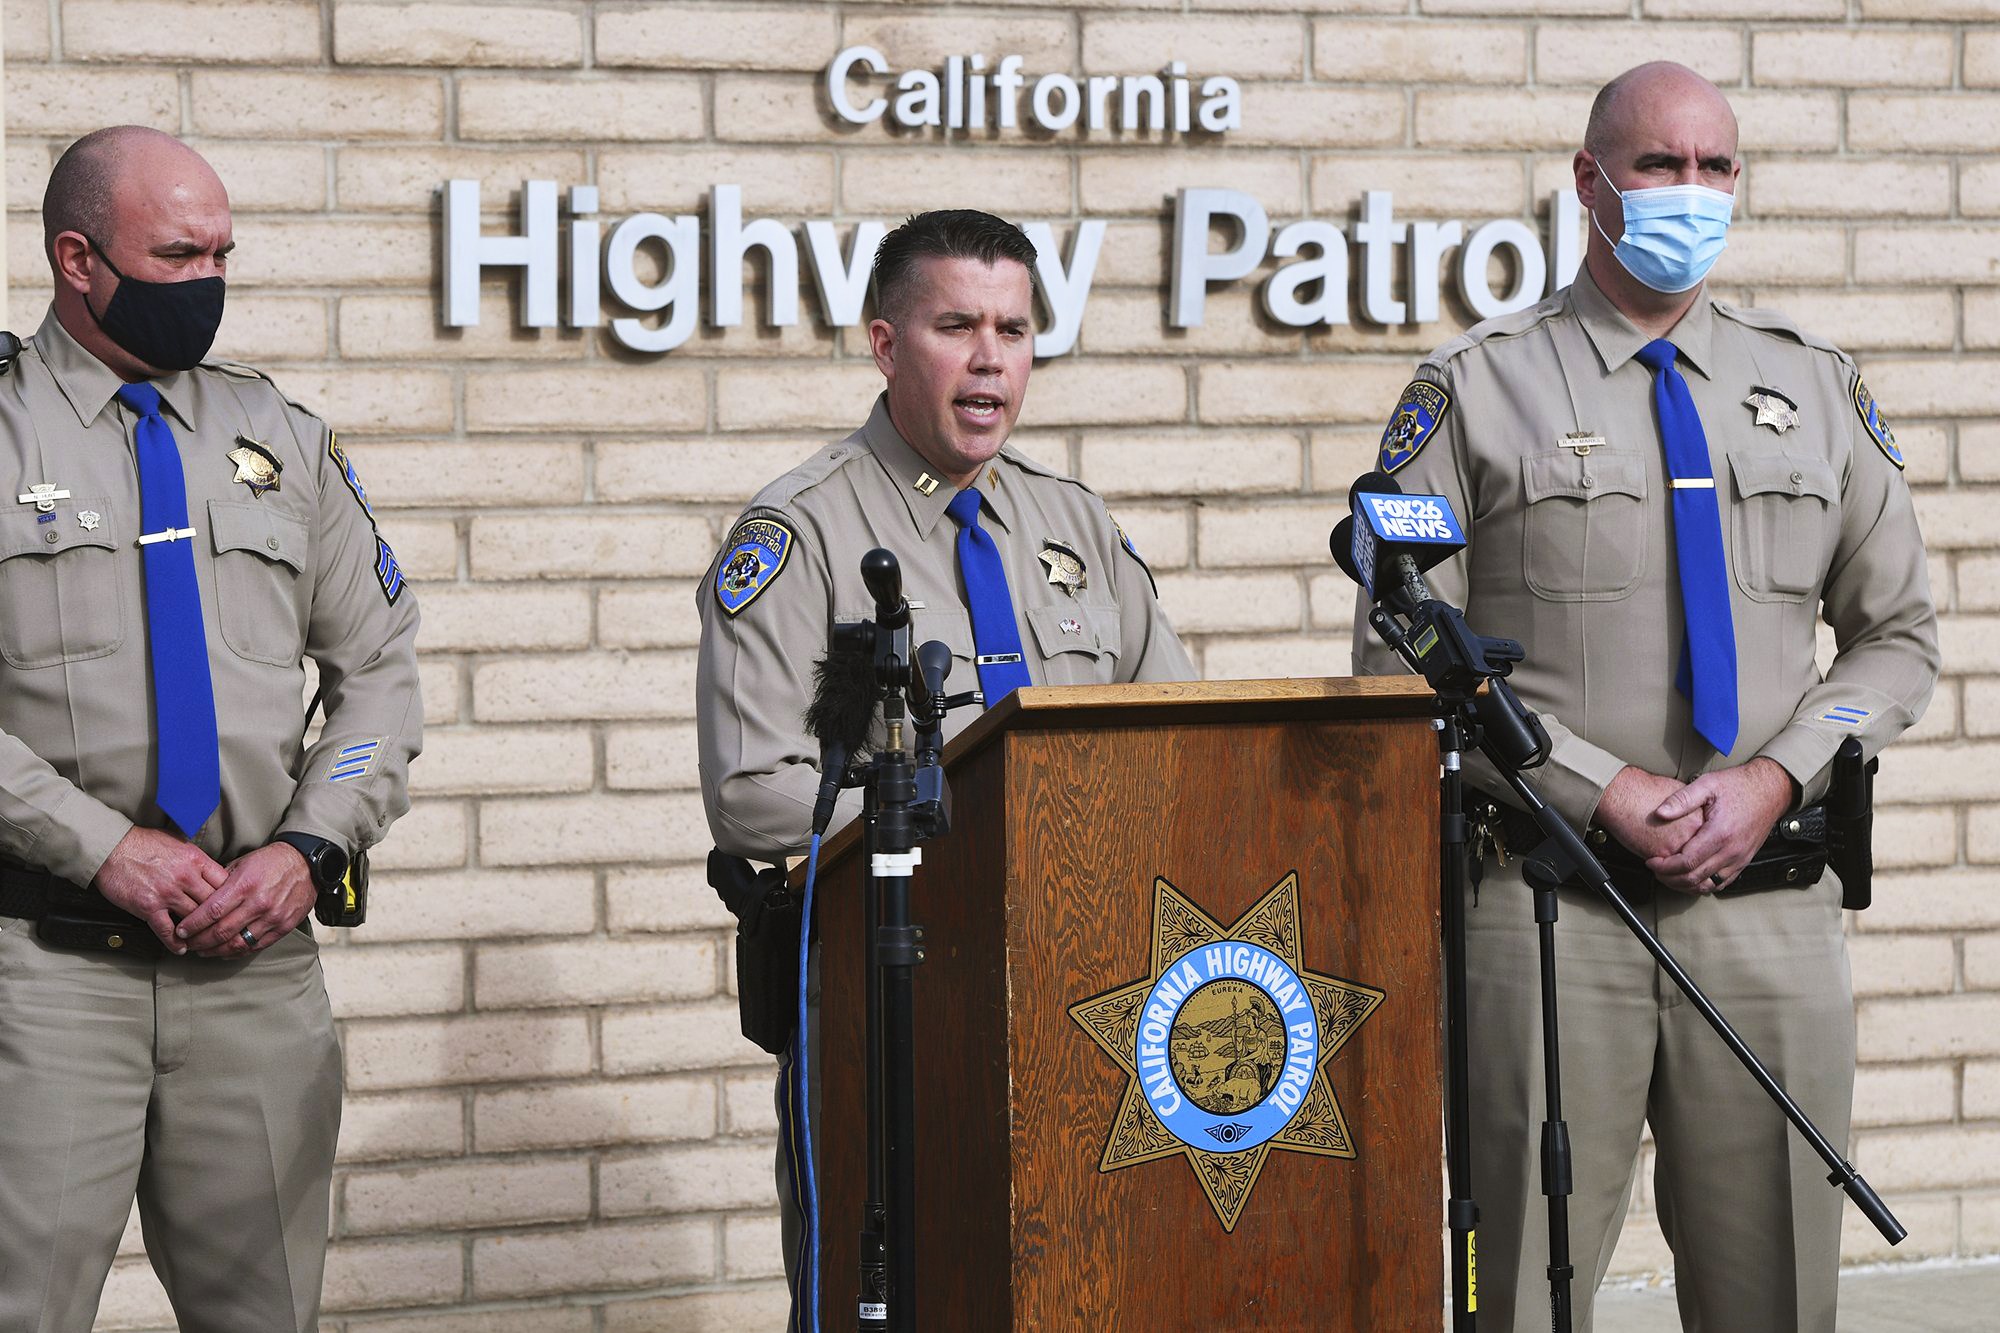 Head-on crash kills 7 children, 2 adults in California